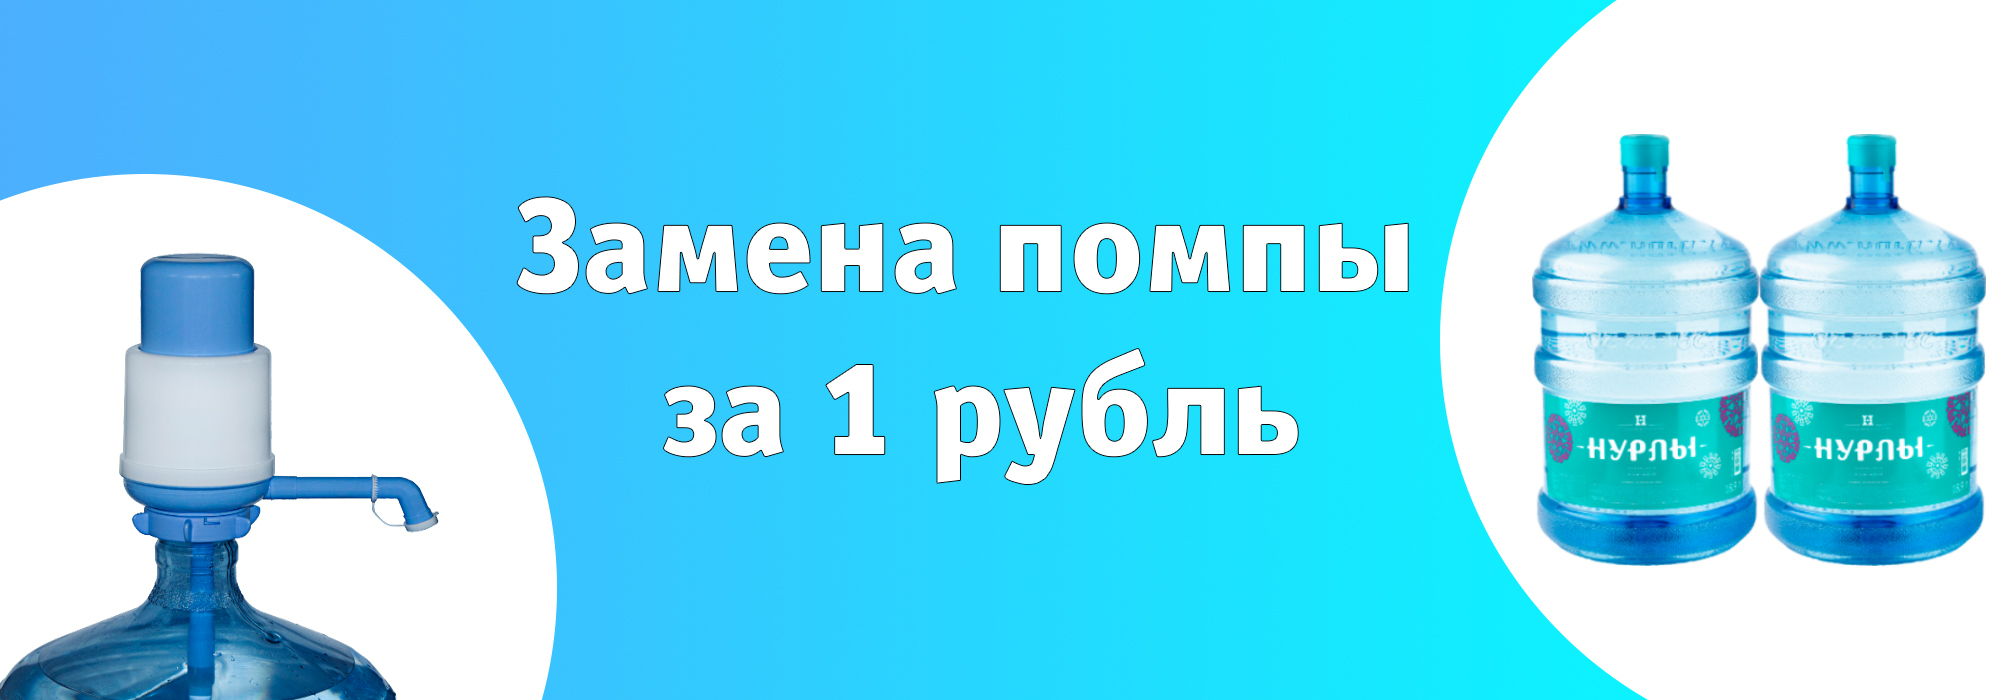 Акция "Замена помпы за 1 рубль"